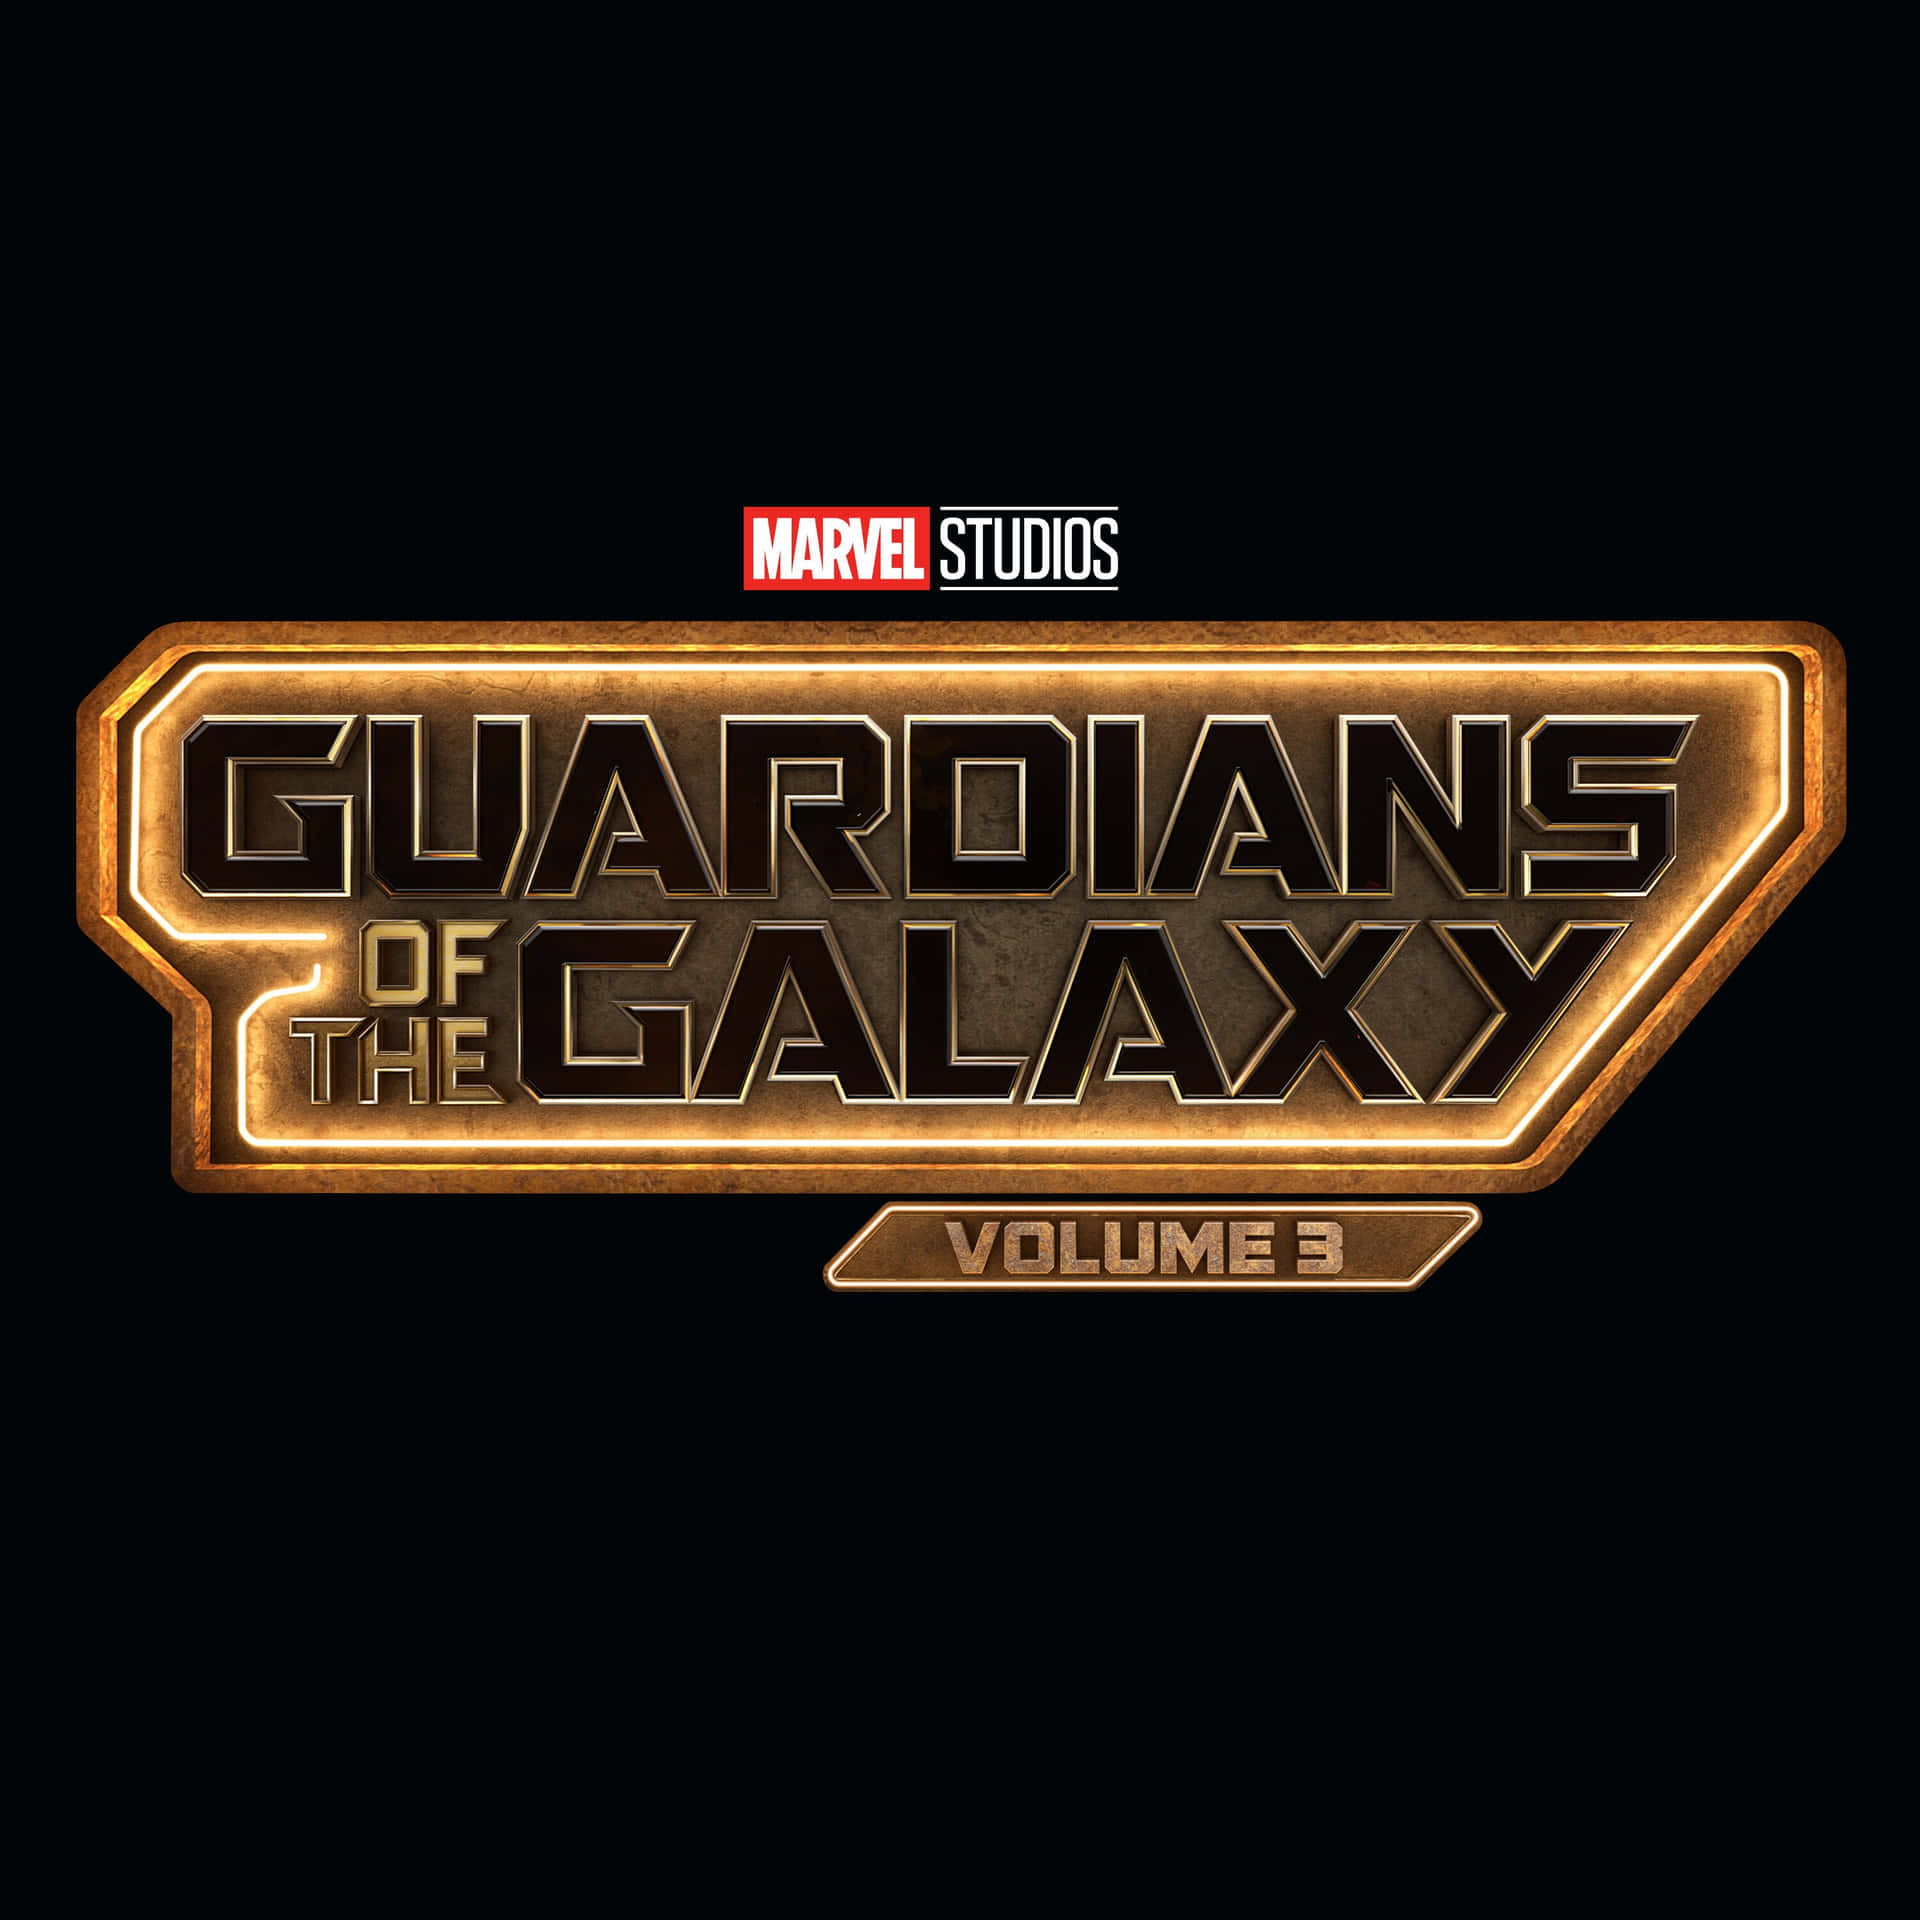 Guardiansofthe Galaxy Volume3 Logo Wallpaper